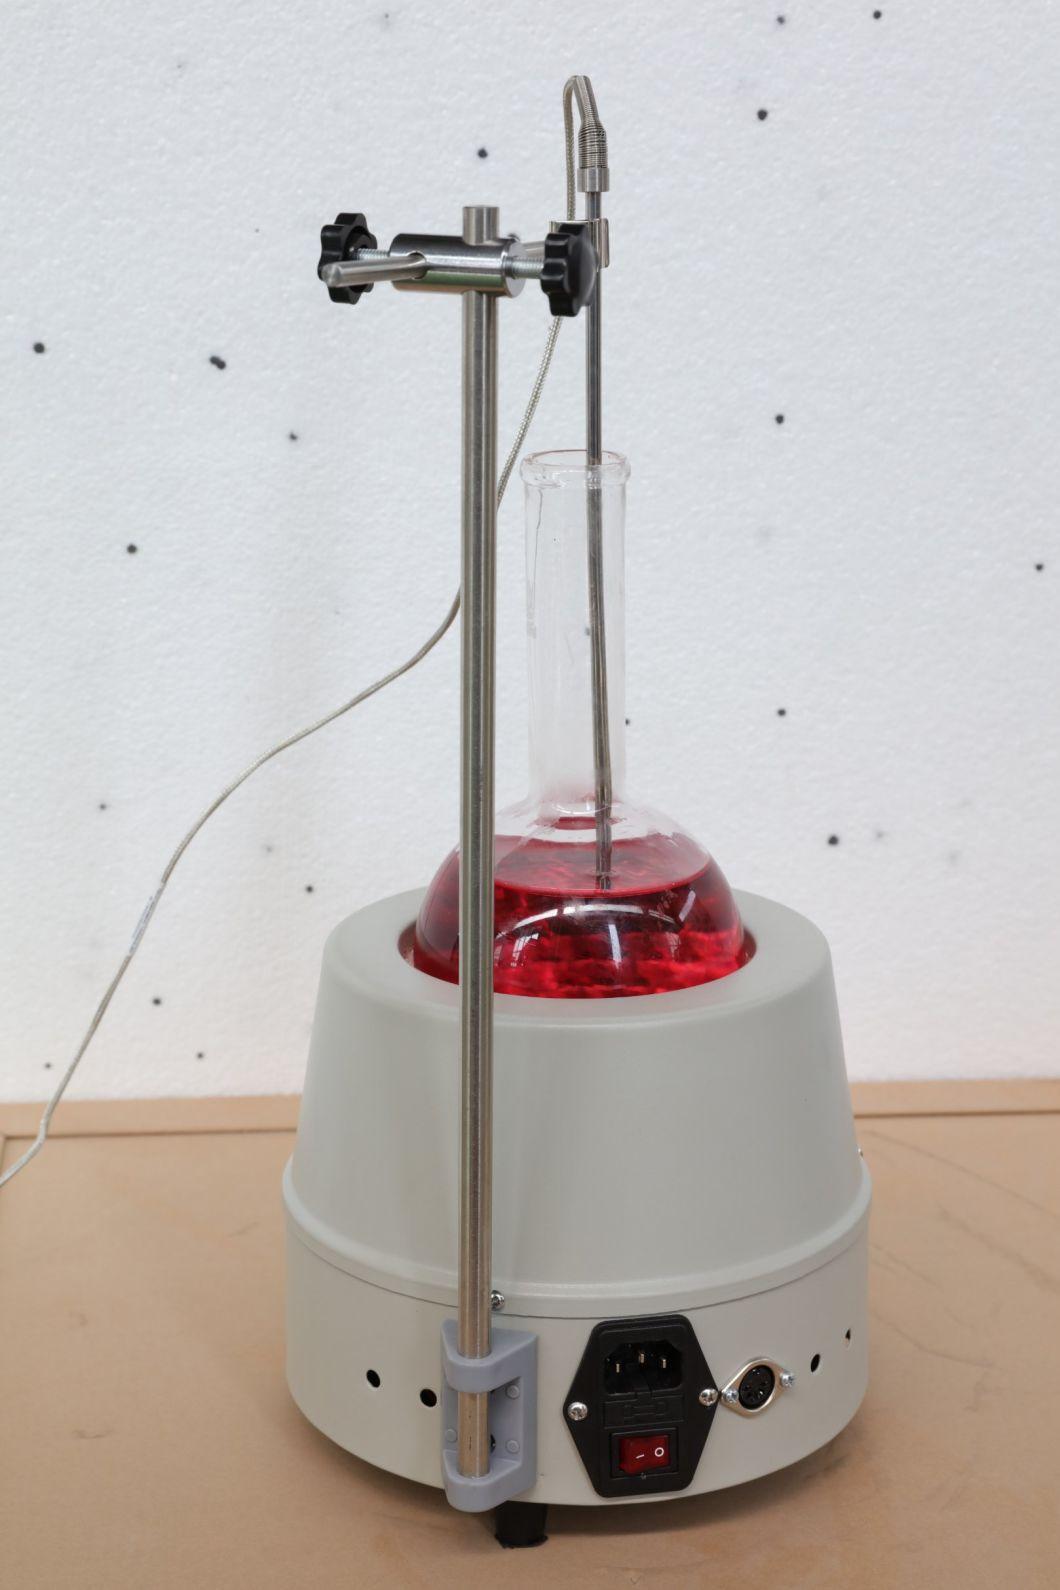 98-I-B Heating Mantle, Lab Instrument